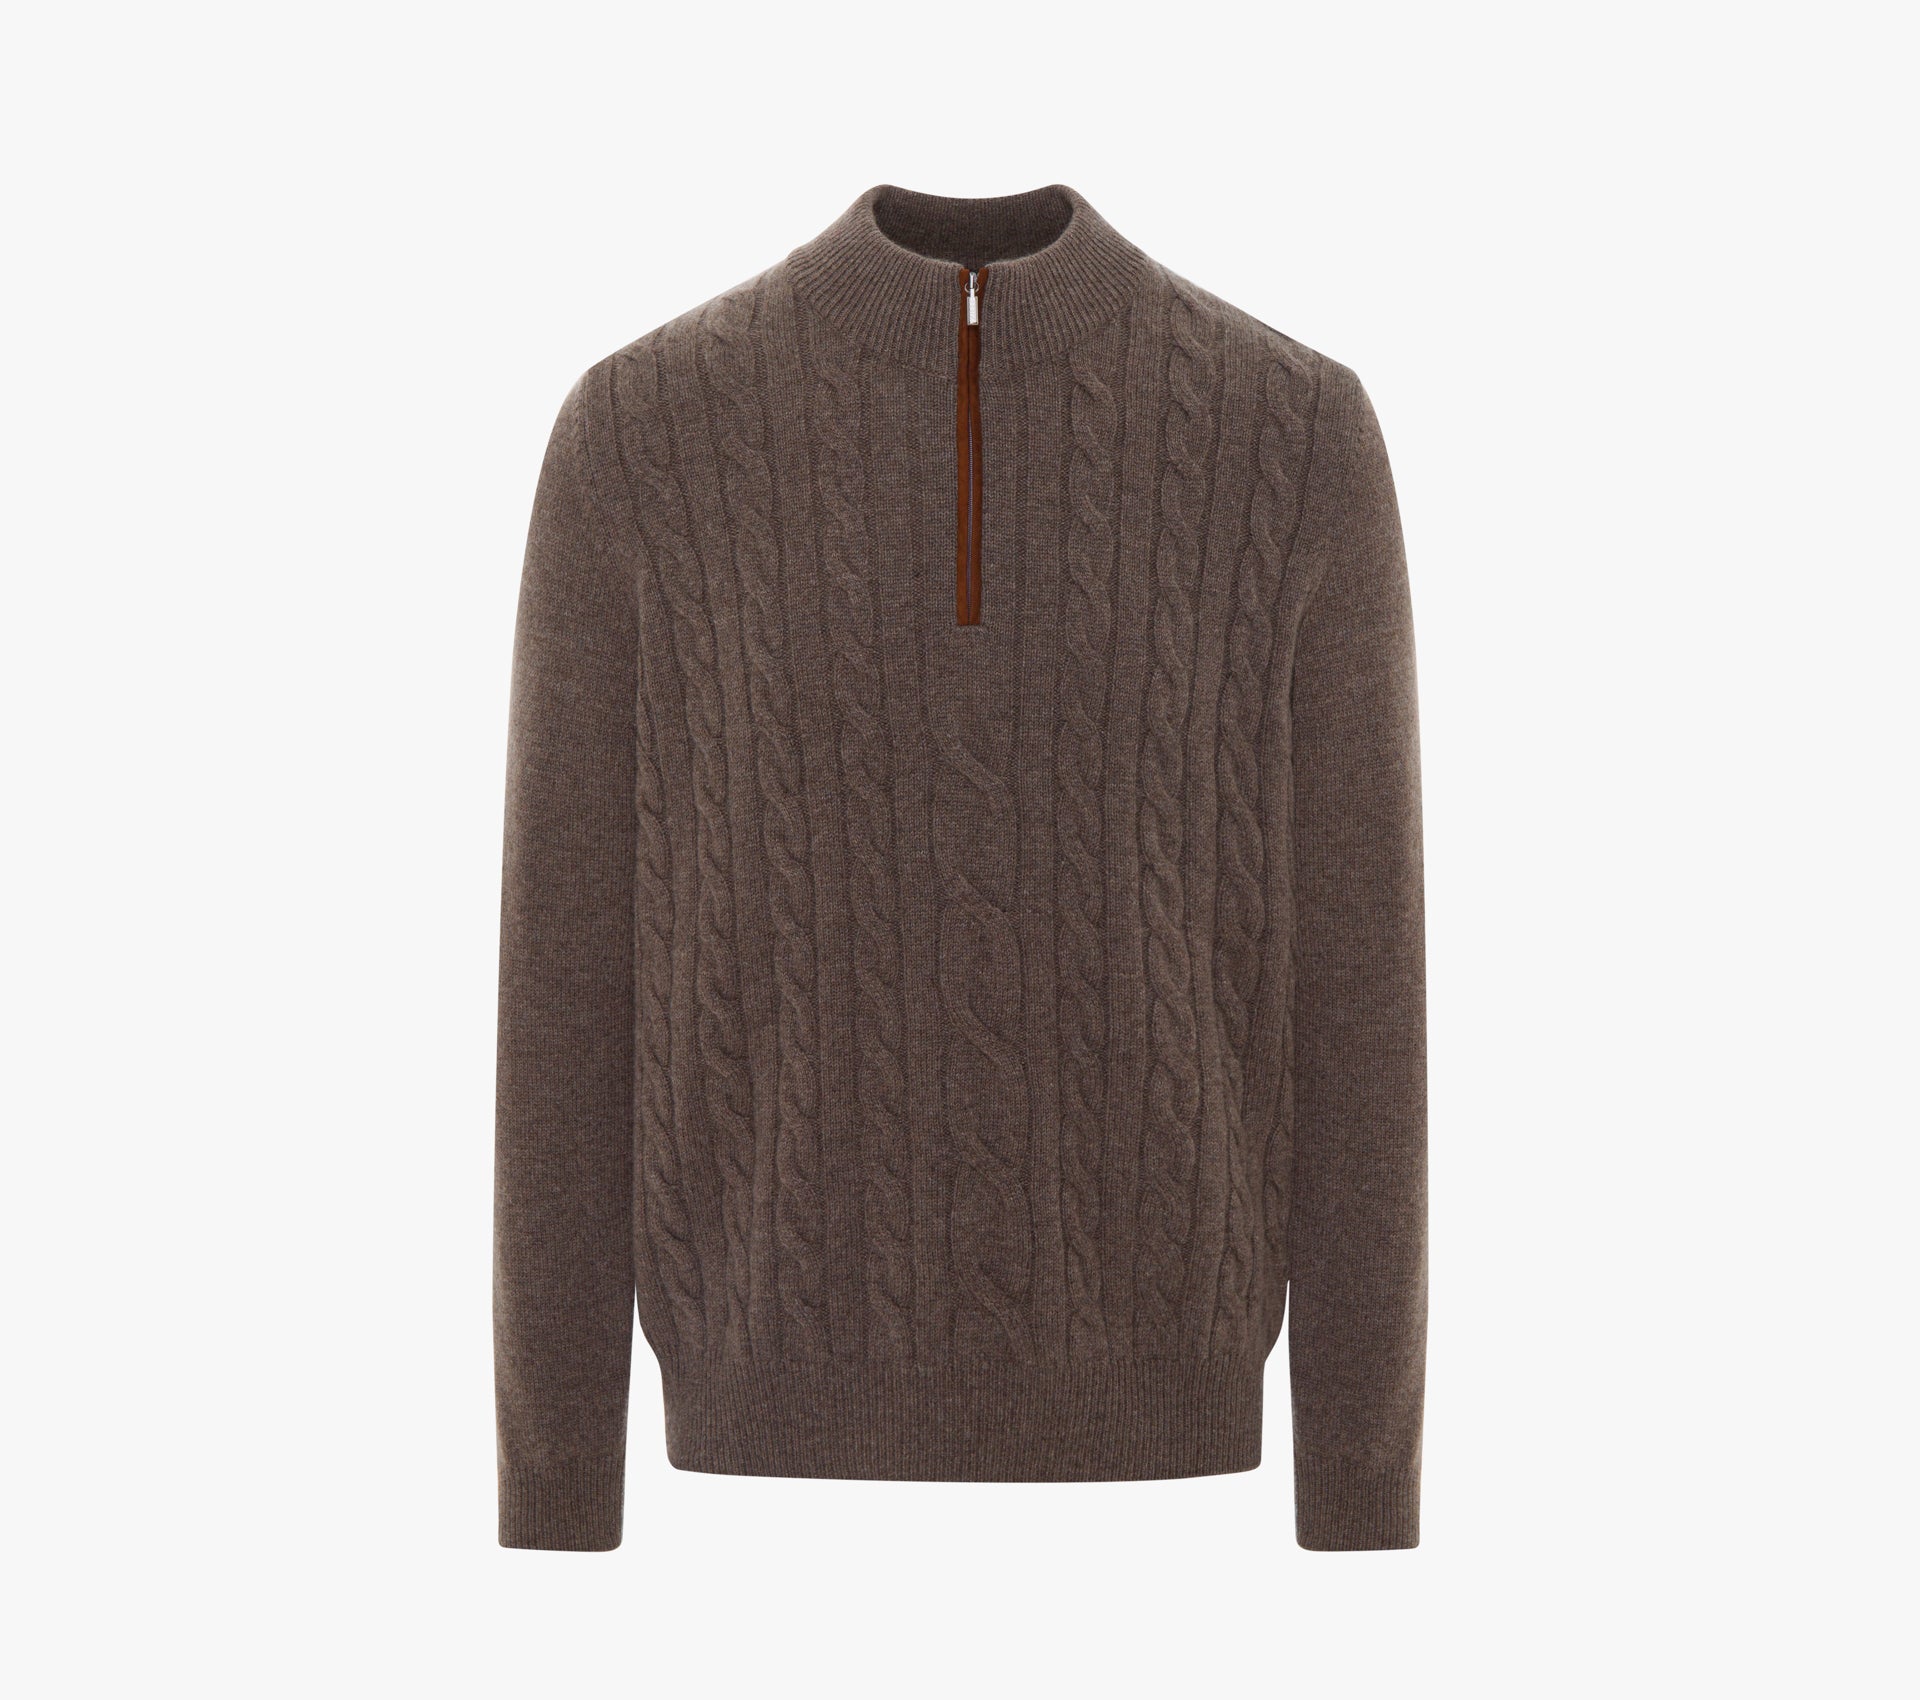 Zipped Mock Neck Sweater with Jacquard Pattern